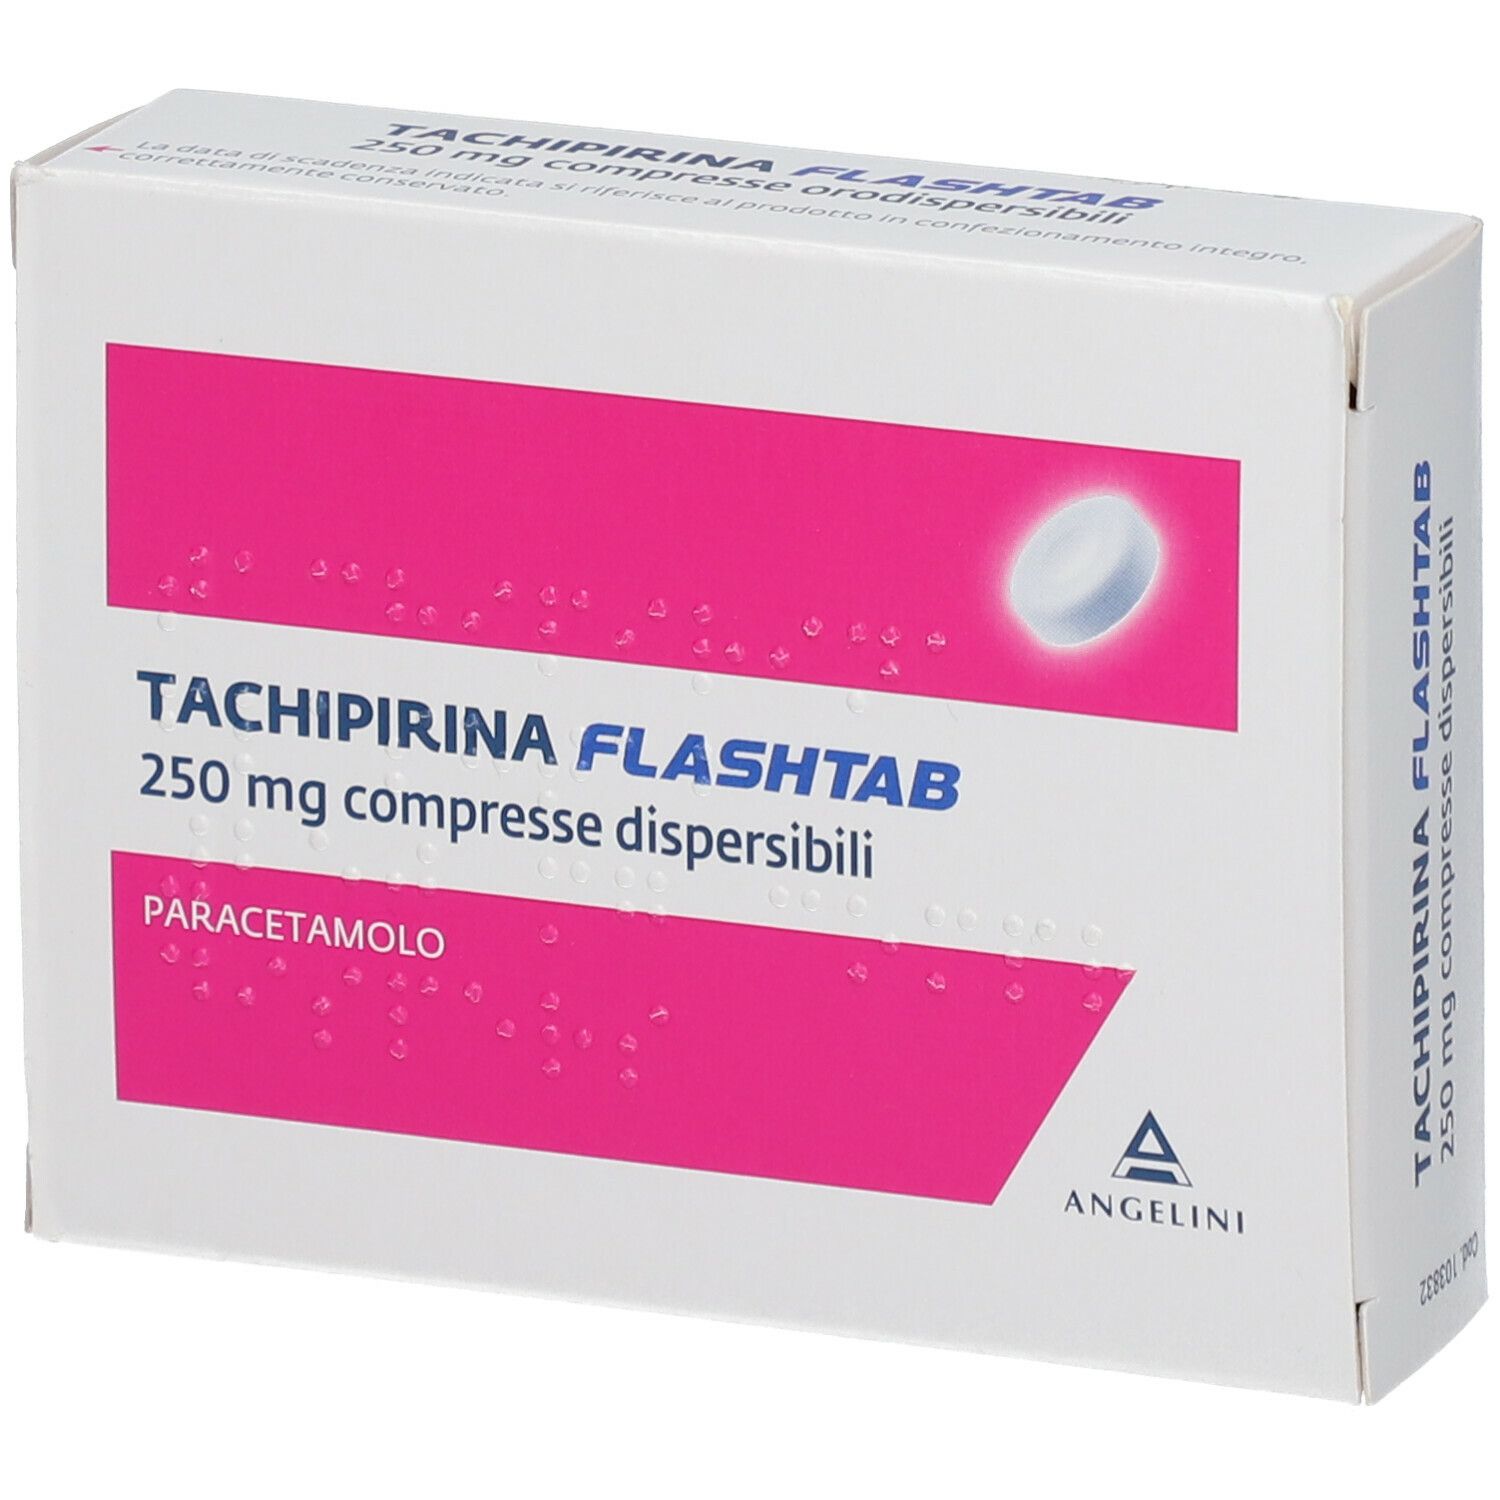 Image of TACHIPIRINA Flashtab 250 mg